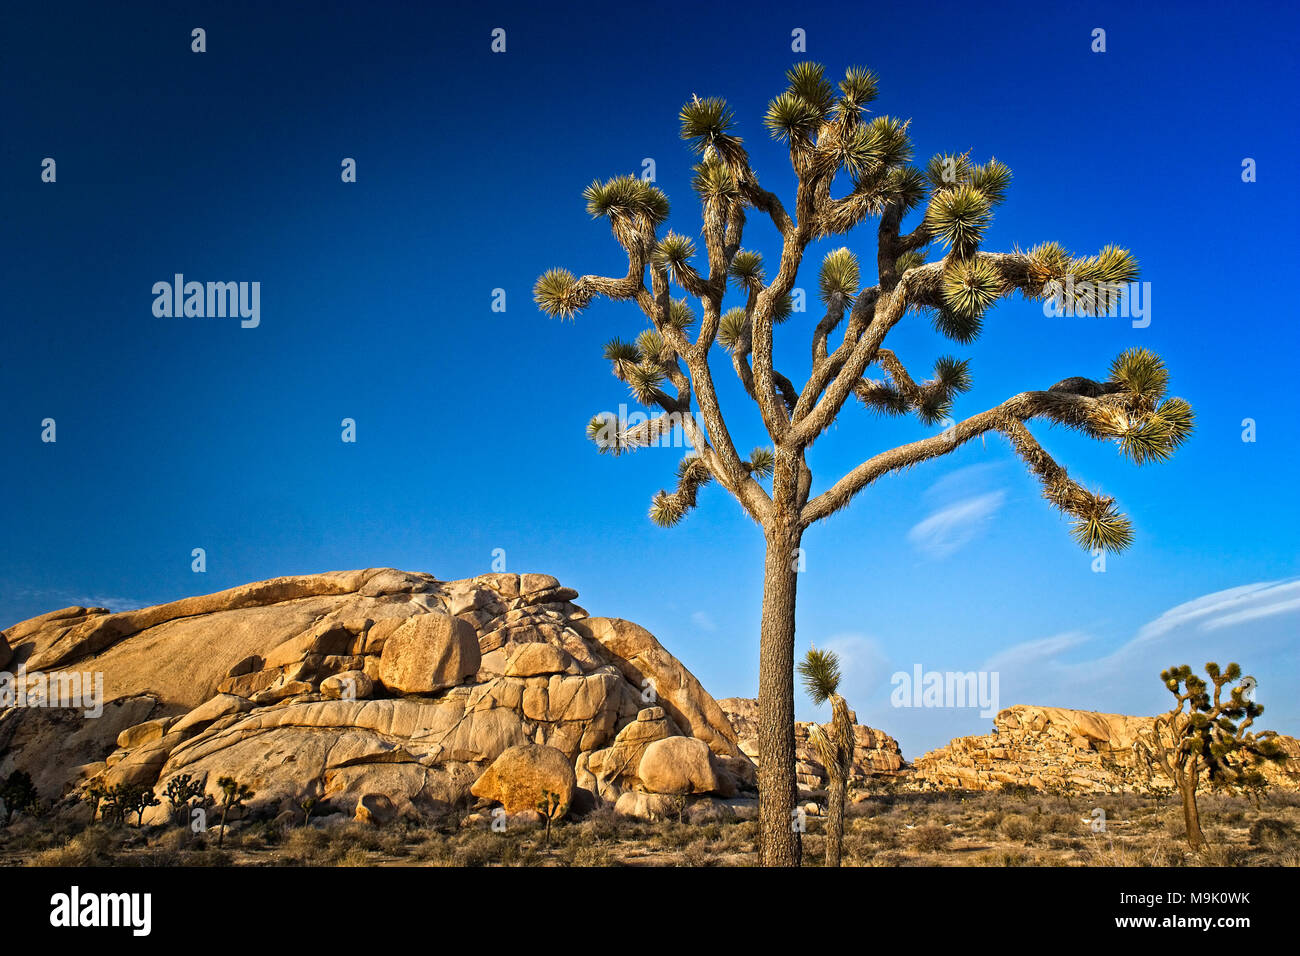 Single Joshua tree in the desert landscape found in Joshua Tree National Park in Southern California's Mojave Desert Stock Photo